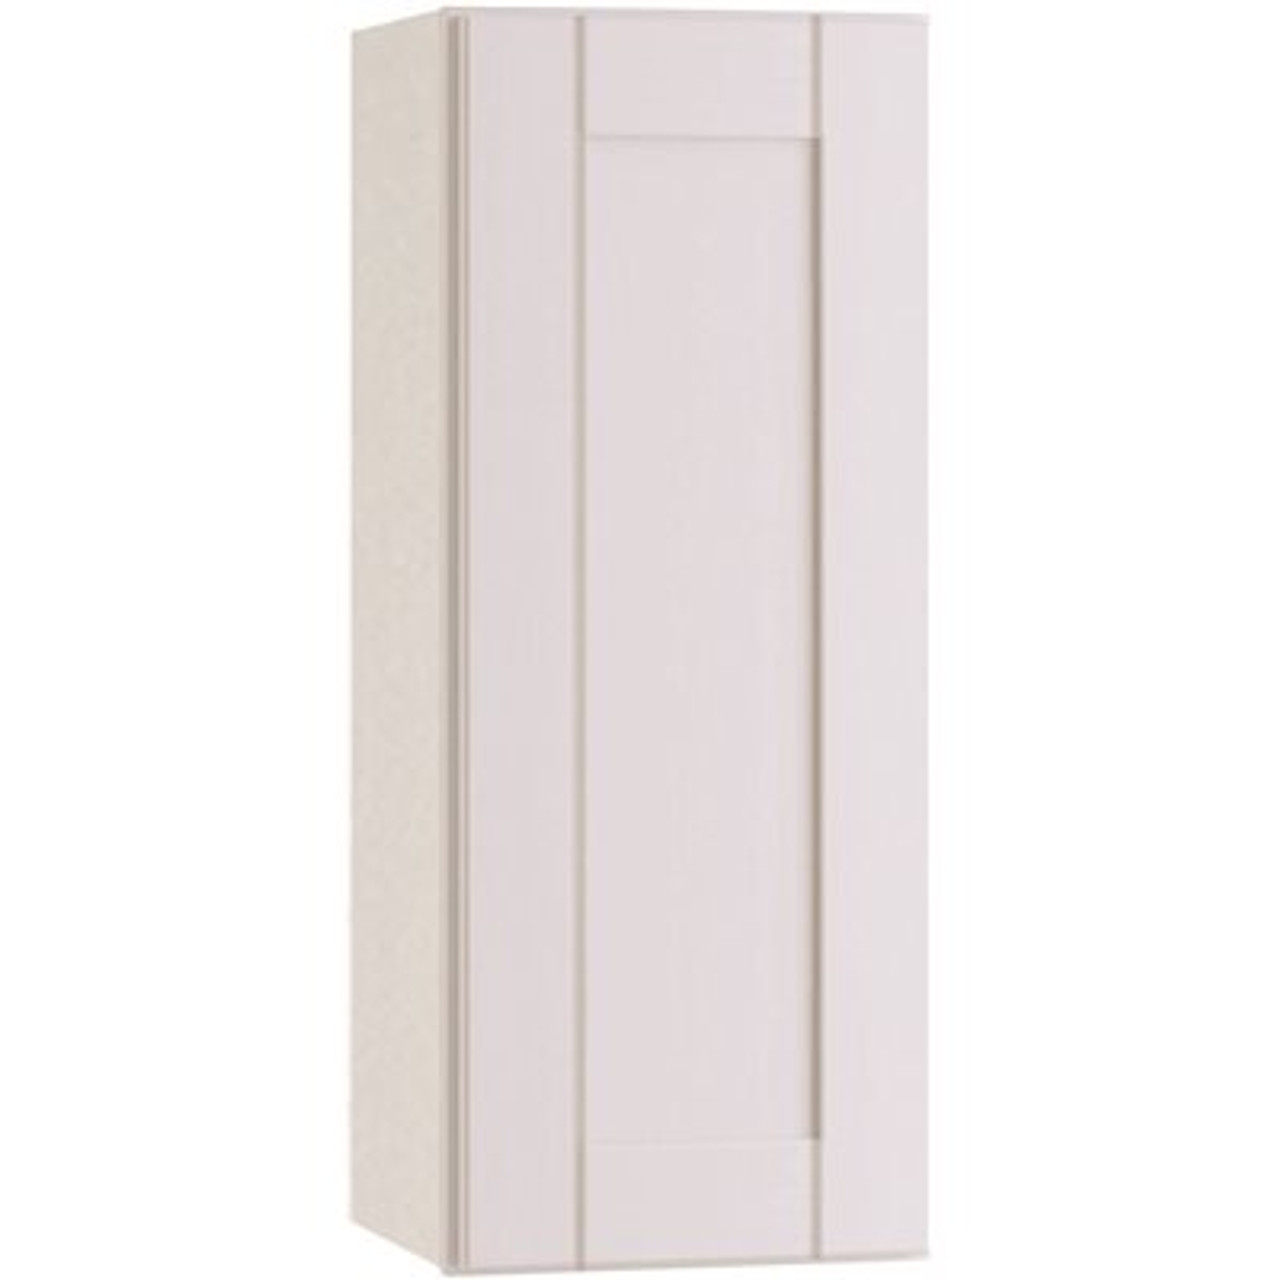 Richmond Shaker Rta Wall Cabinet, Single, Verona White, 15"x30"x12"